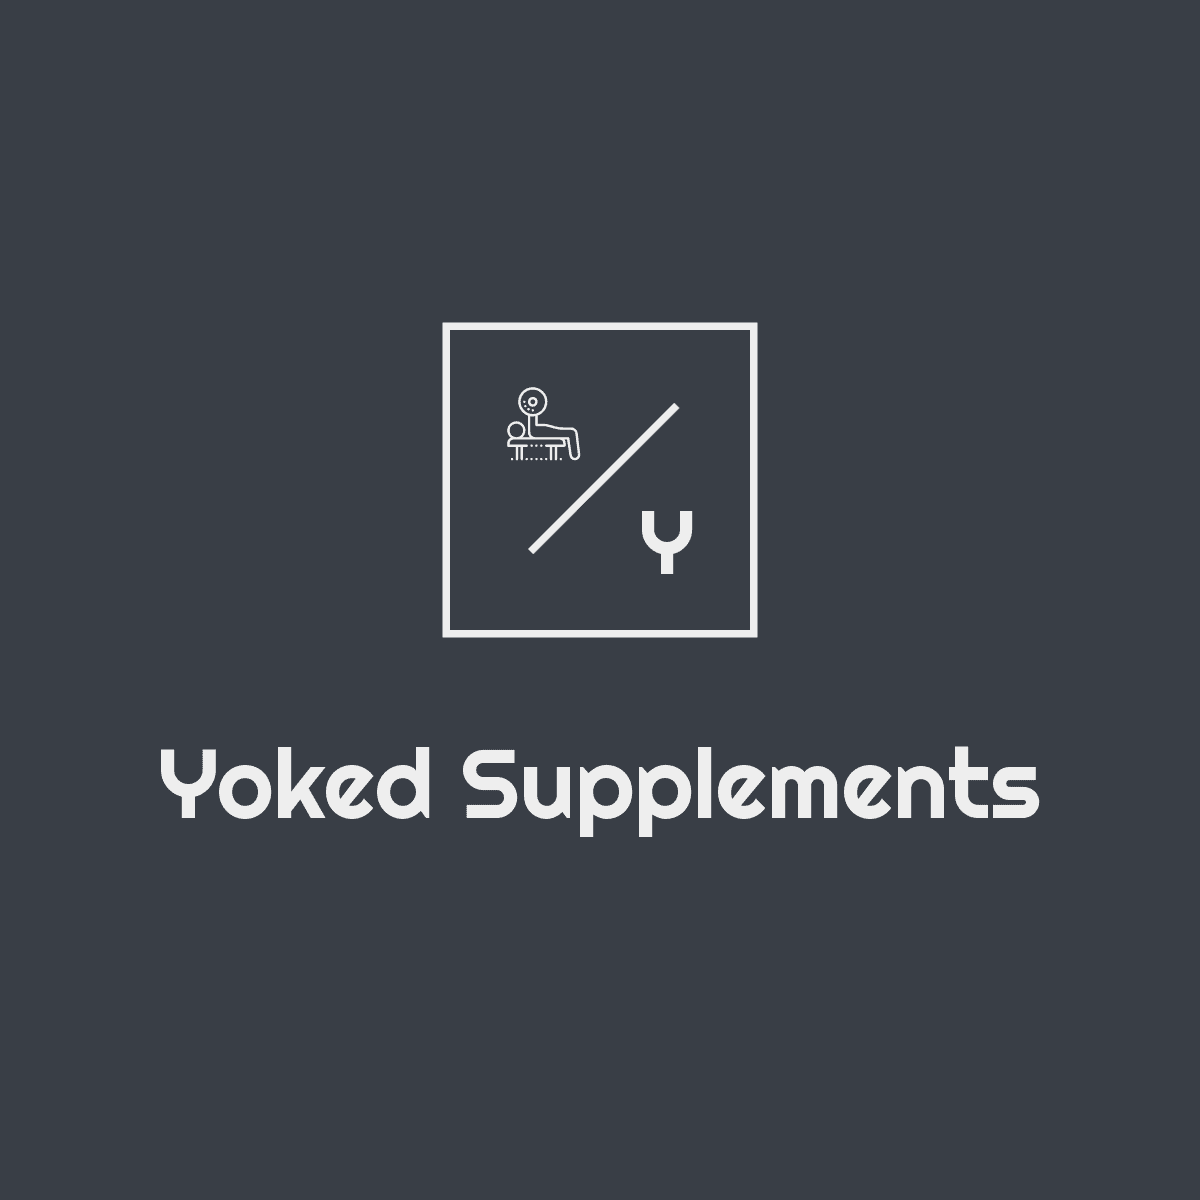 Yoked Supplements